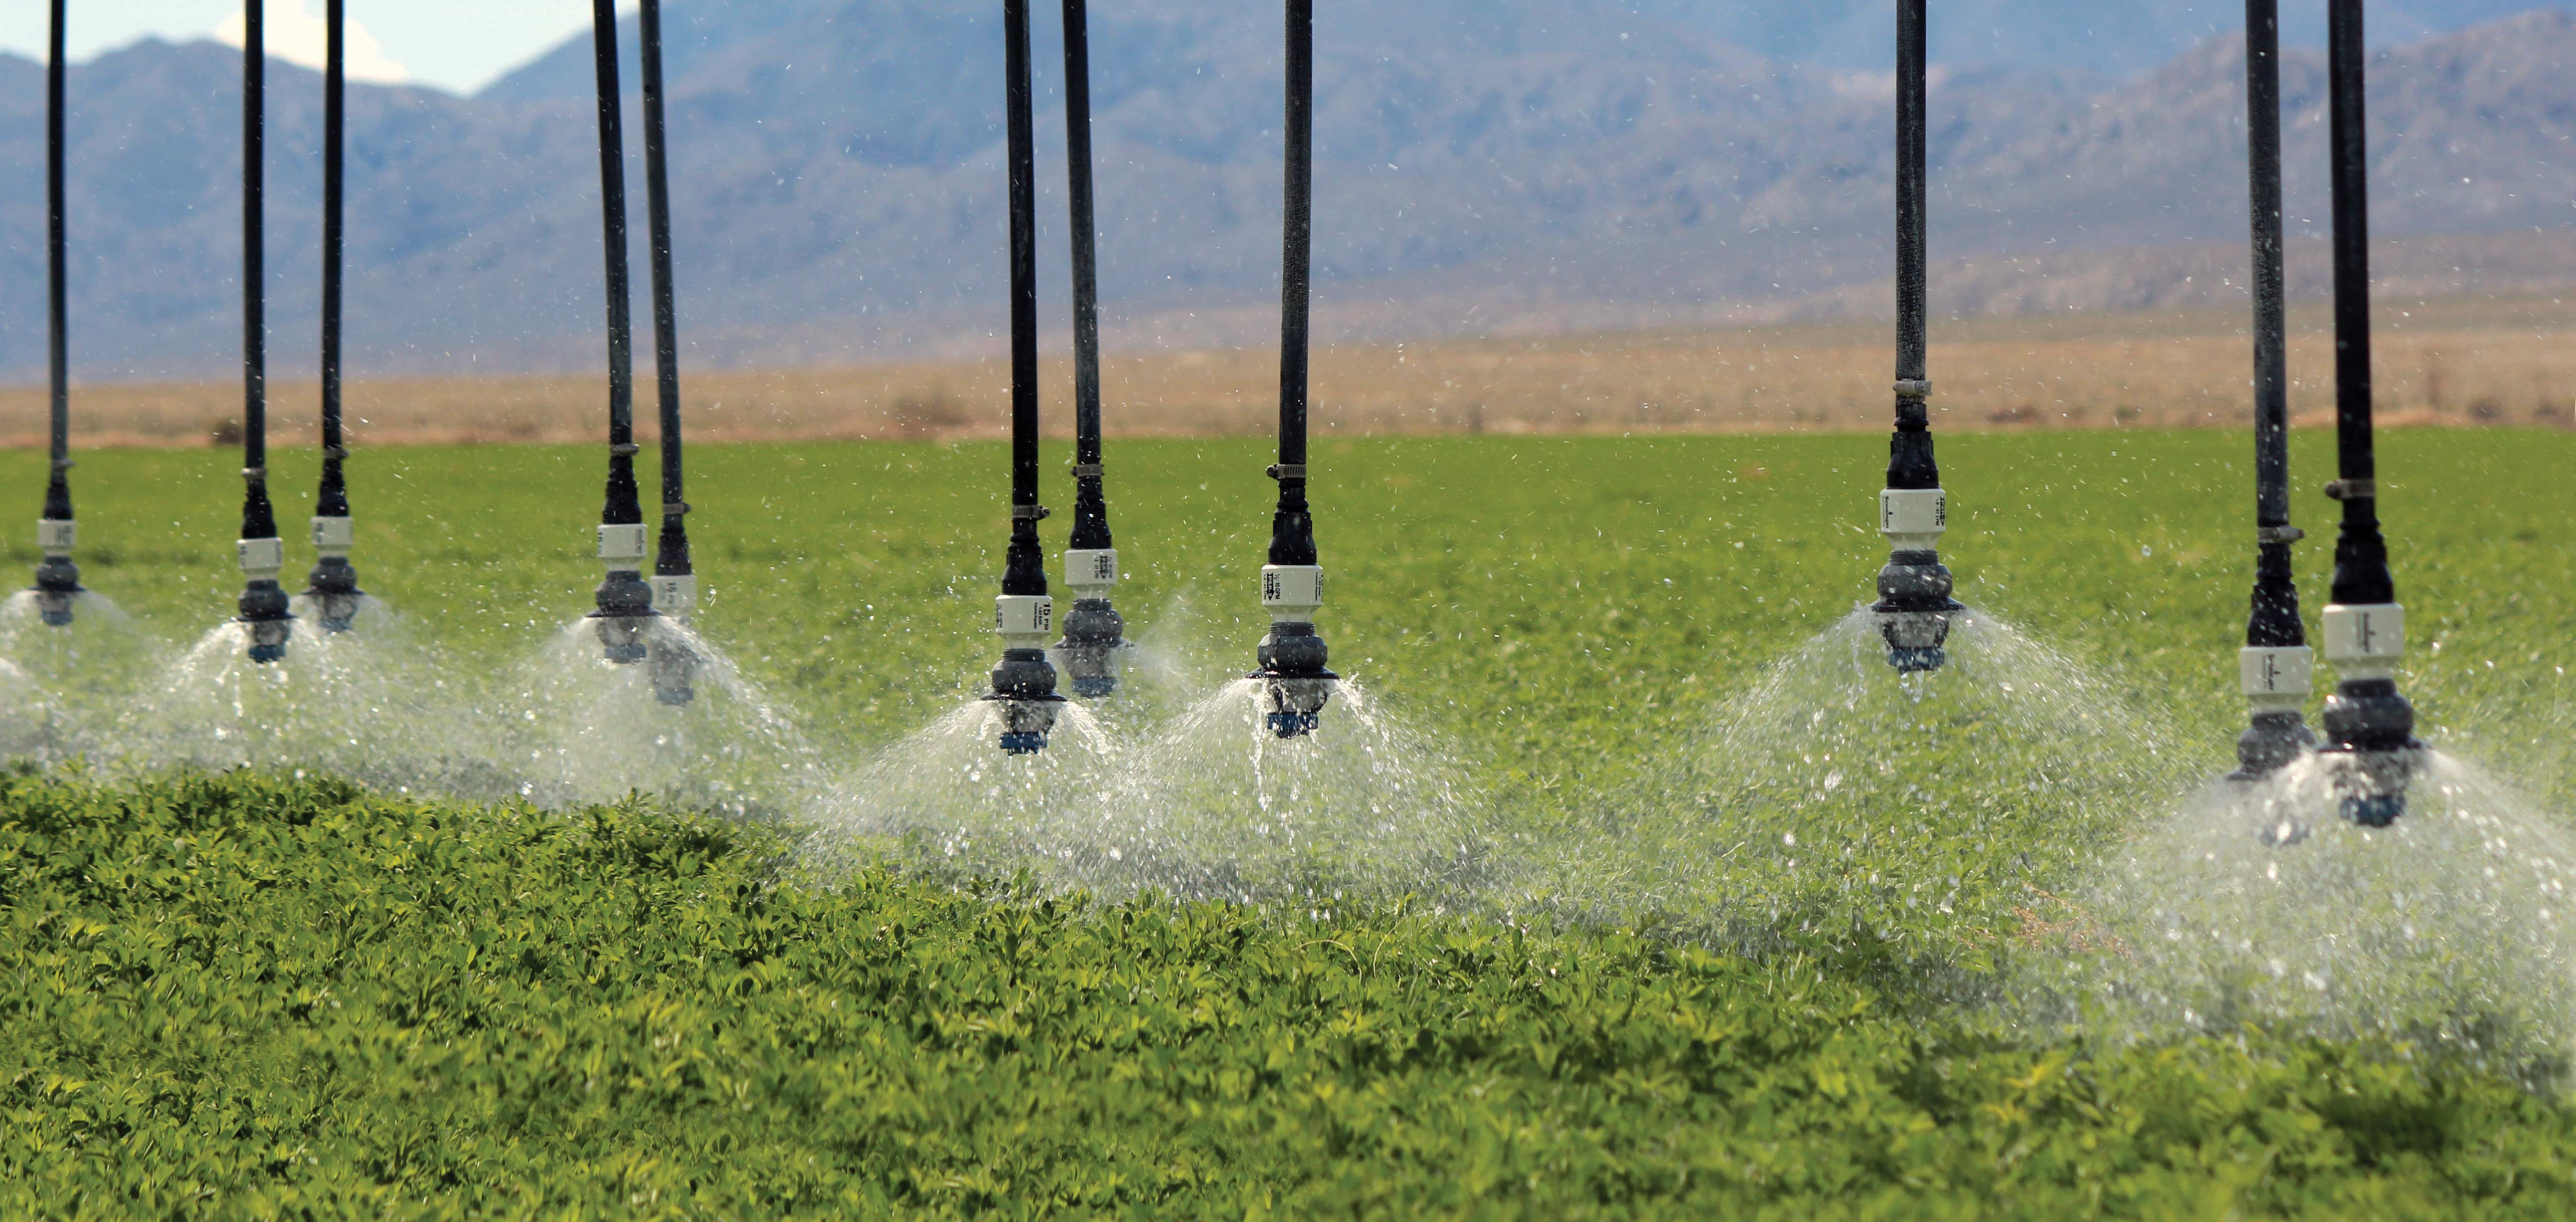 senninger sprinklers for center pivot irrigation systems